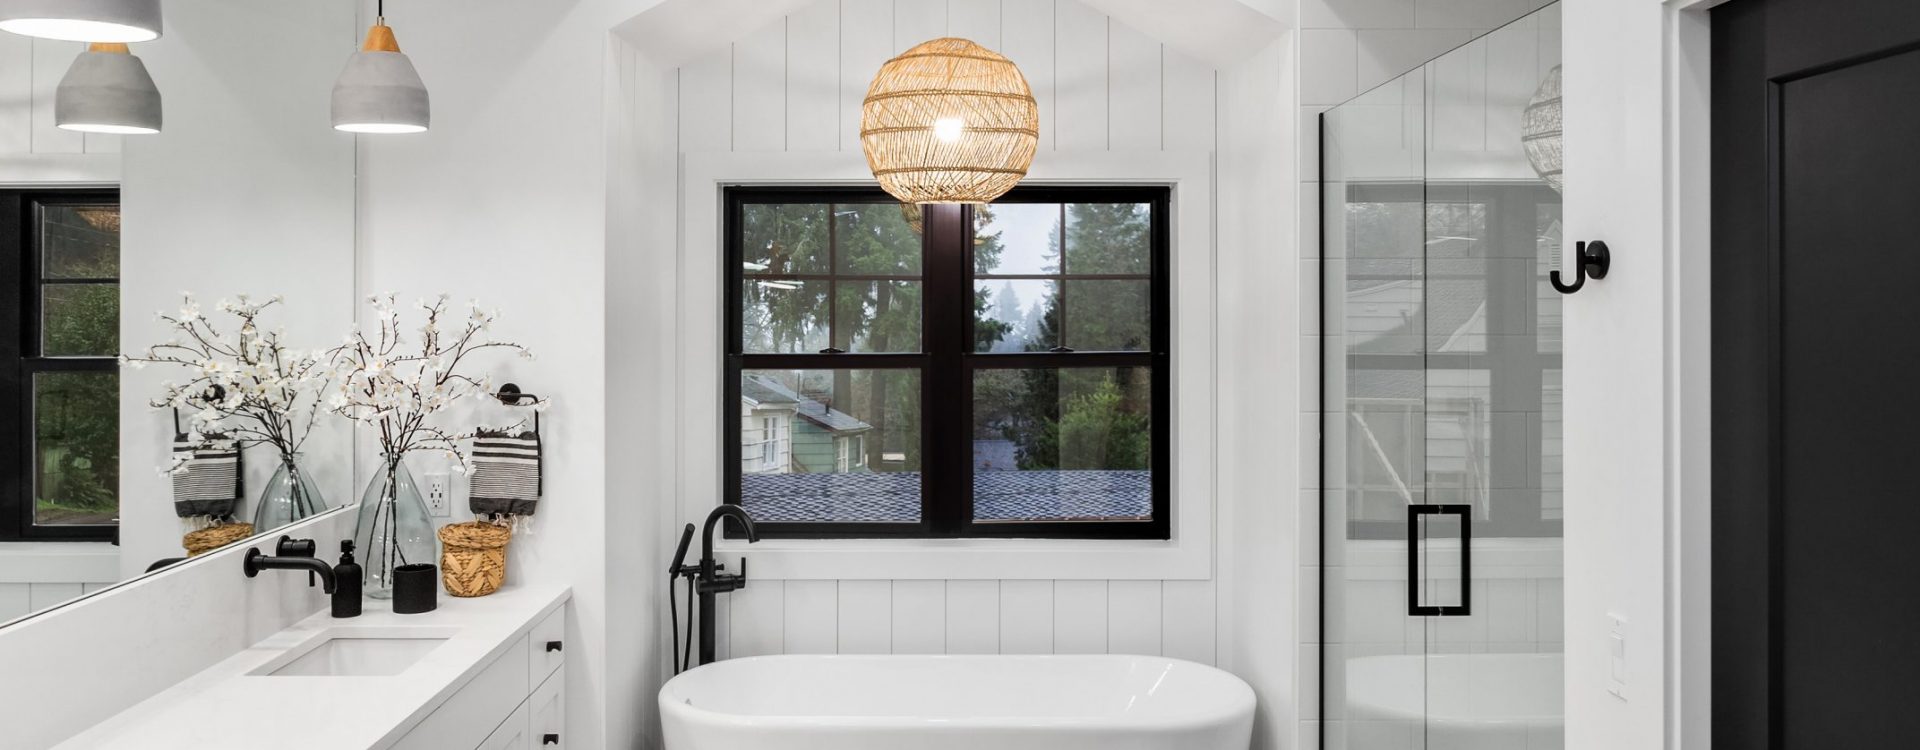 Stylish bathroom with herringbone tile pattern and crisp white decor.